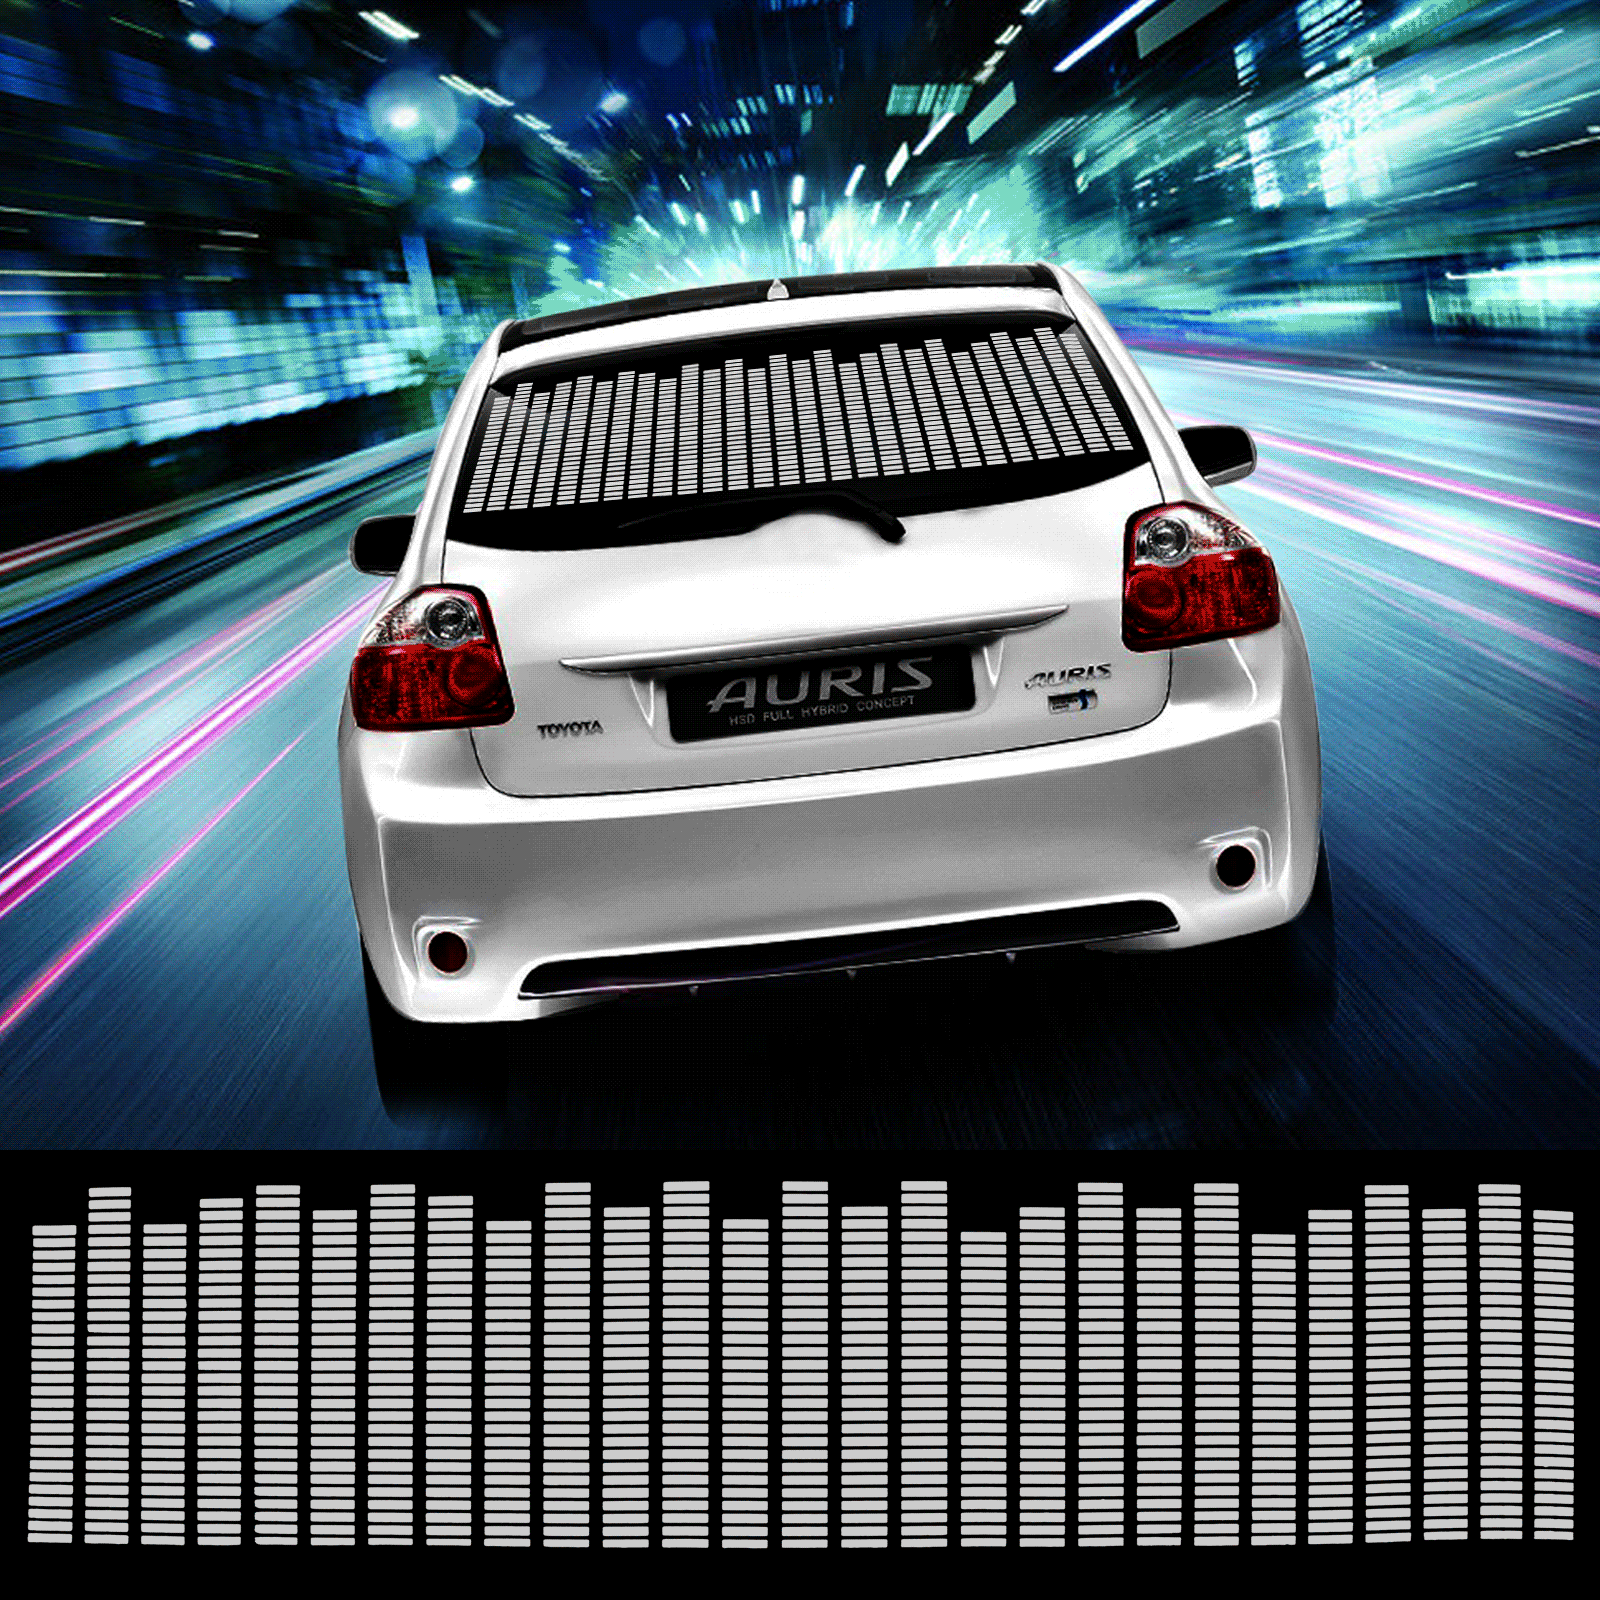 114 30cm White Car Sticker Music Rhythm LED Flash Lamp Sound Activated Equalizer